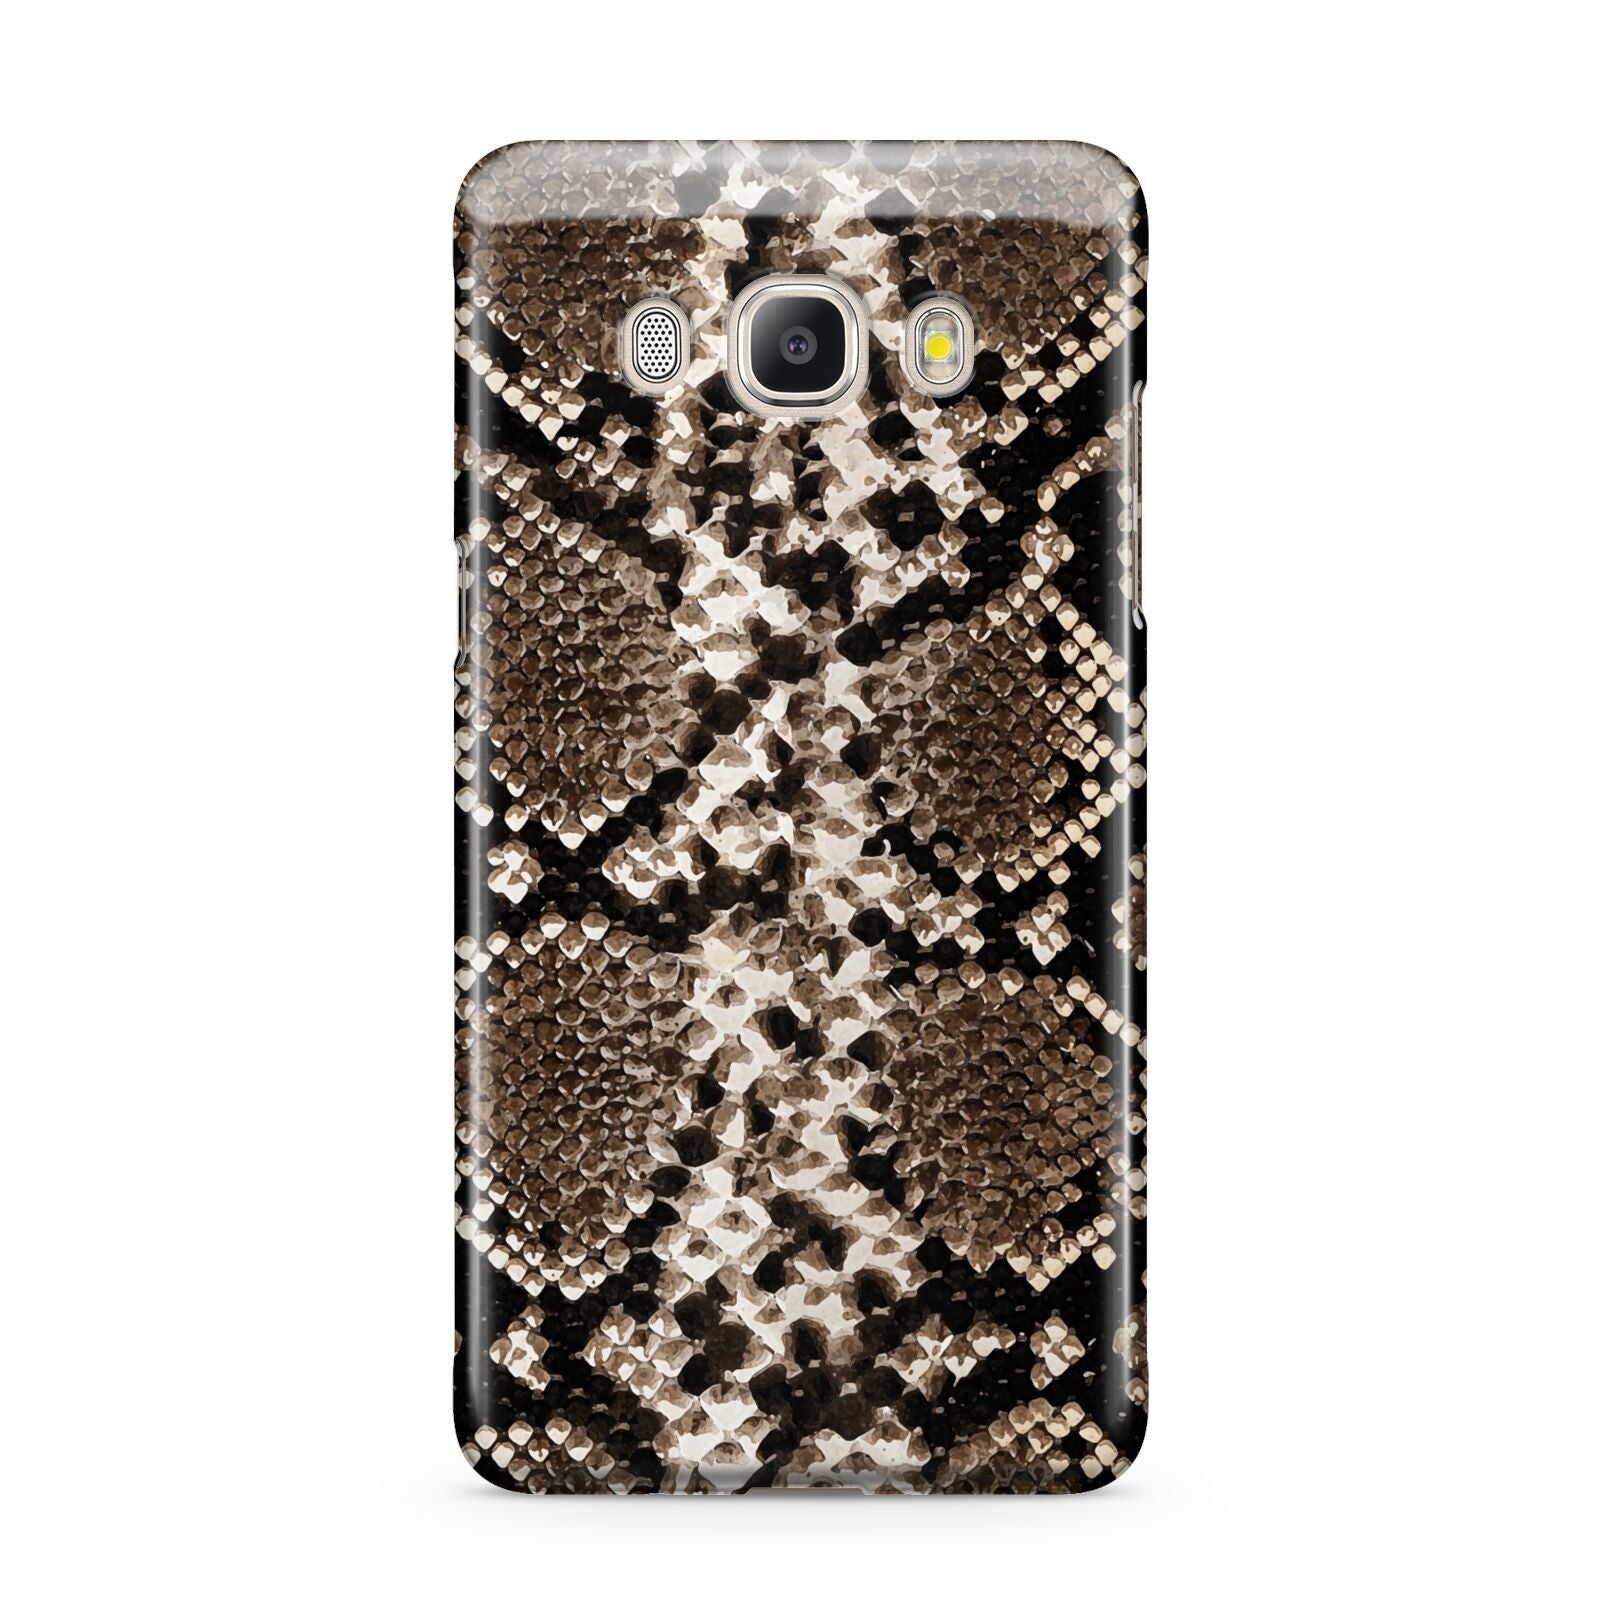 Snakeskin Pattern Samsung Galaxy J5 2016 Case